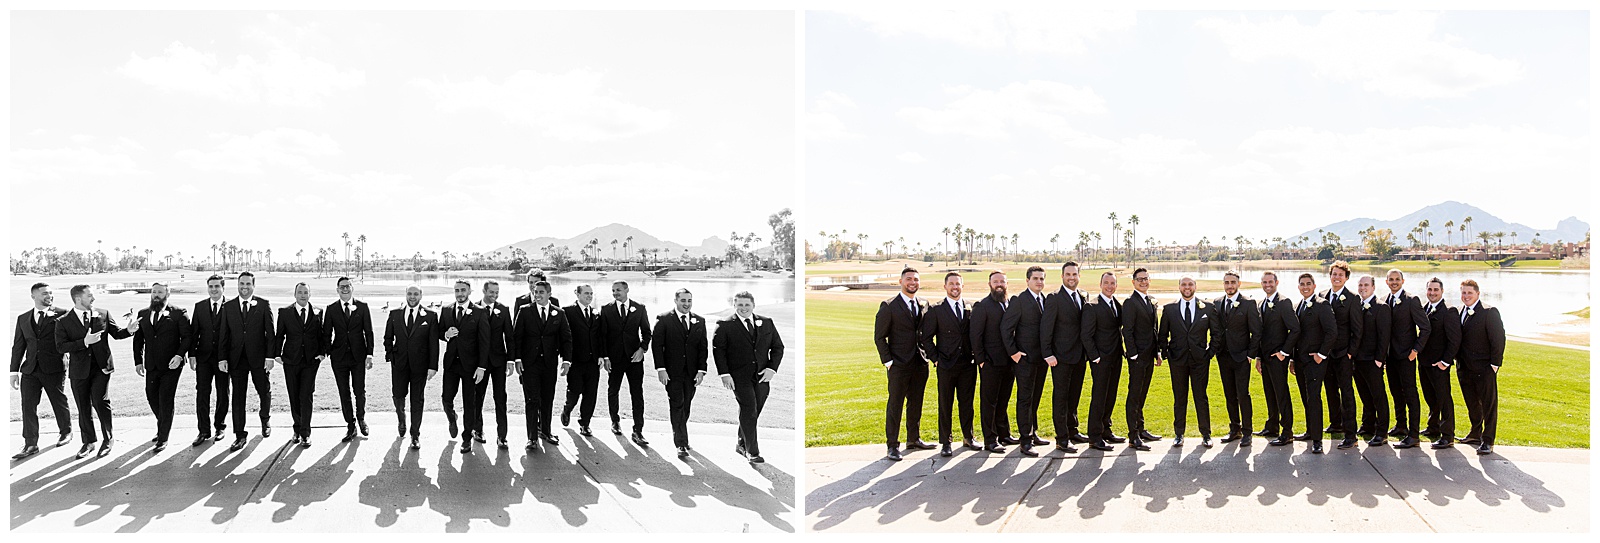 Groomsmen photo at Black Tie Wedding at McCormick Ranch Golf Club, Scottsdale AZ